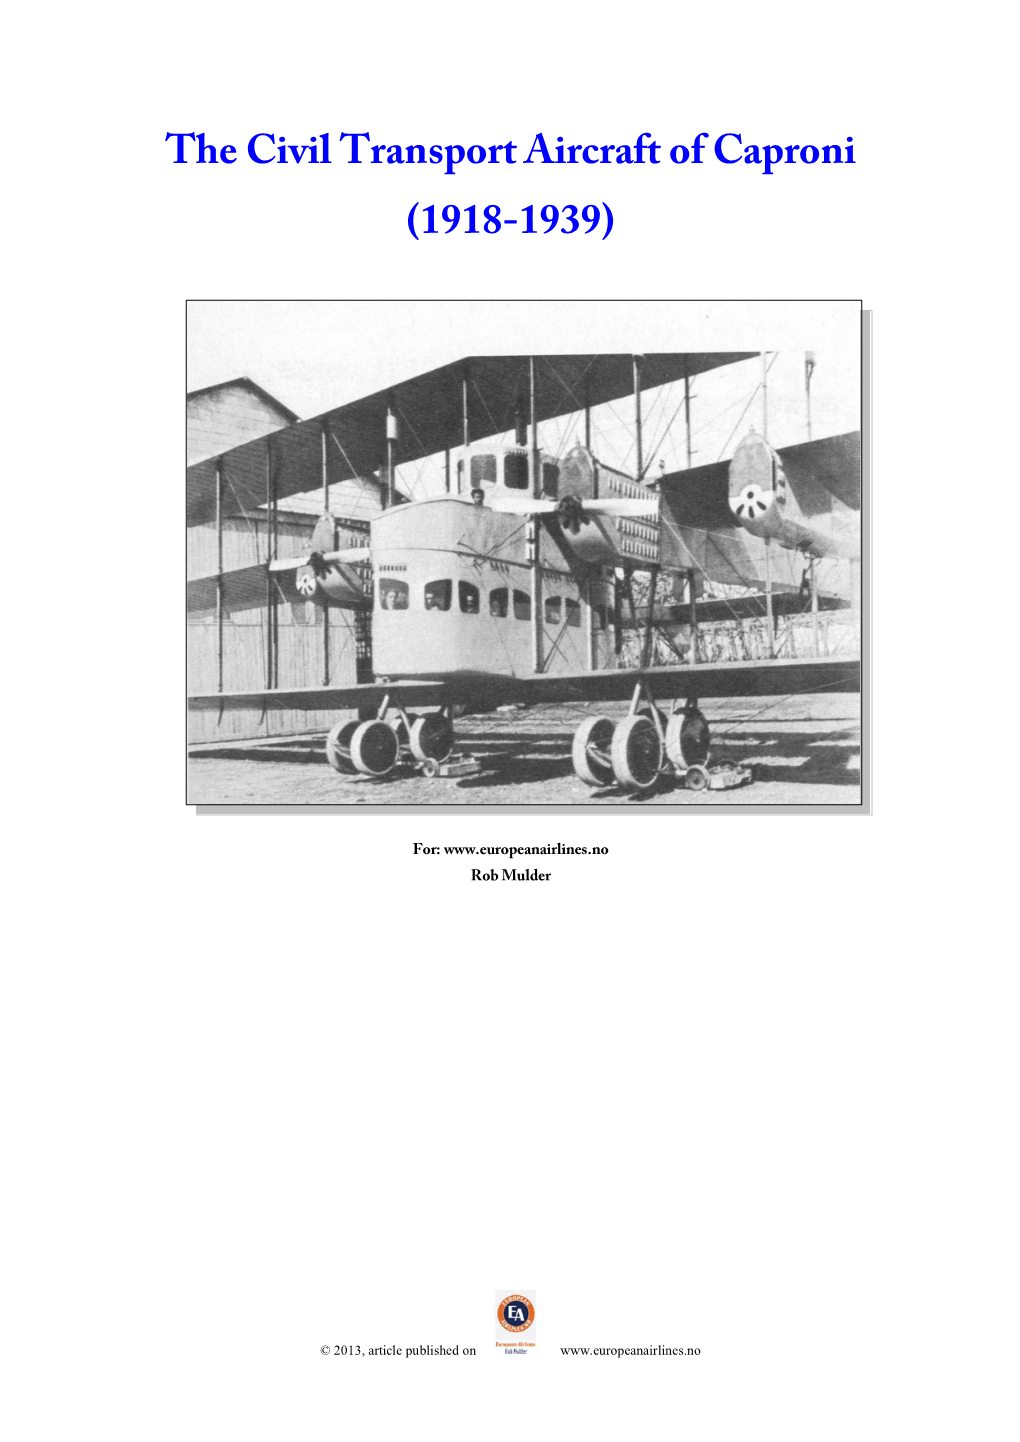 The Civil Aircraft of Caproni